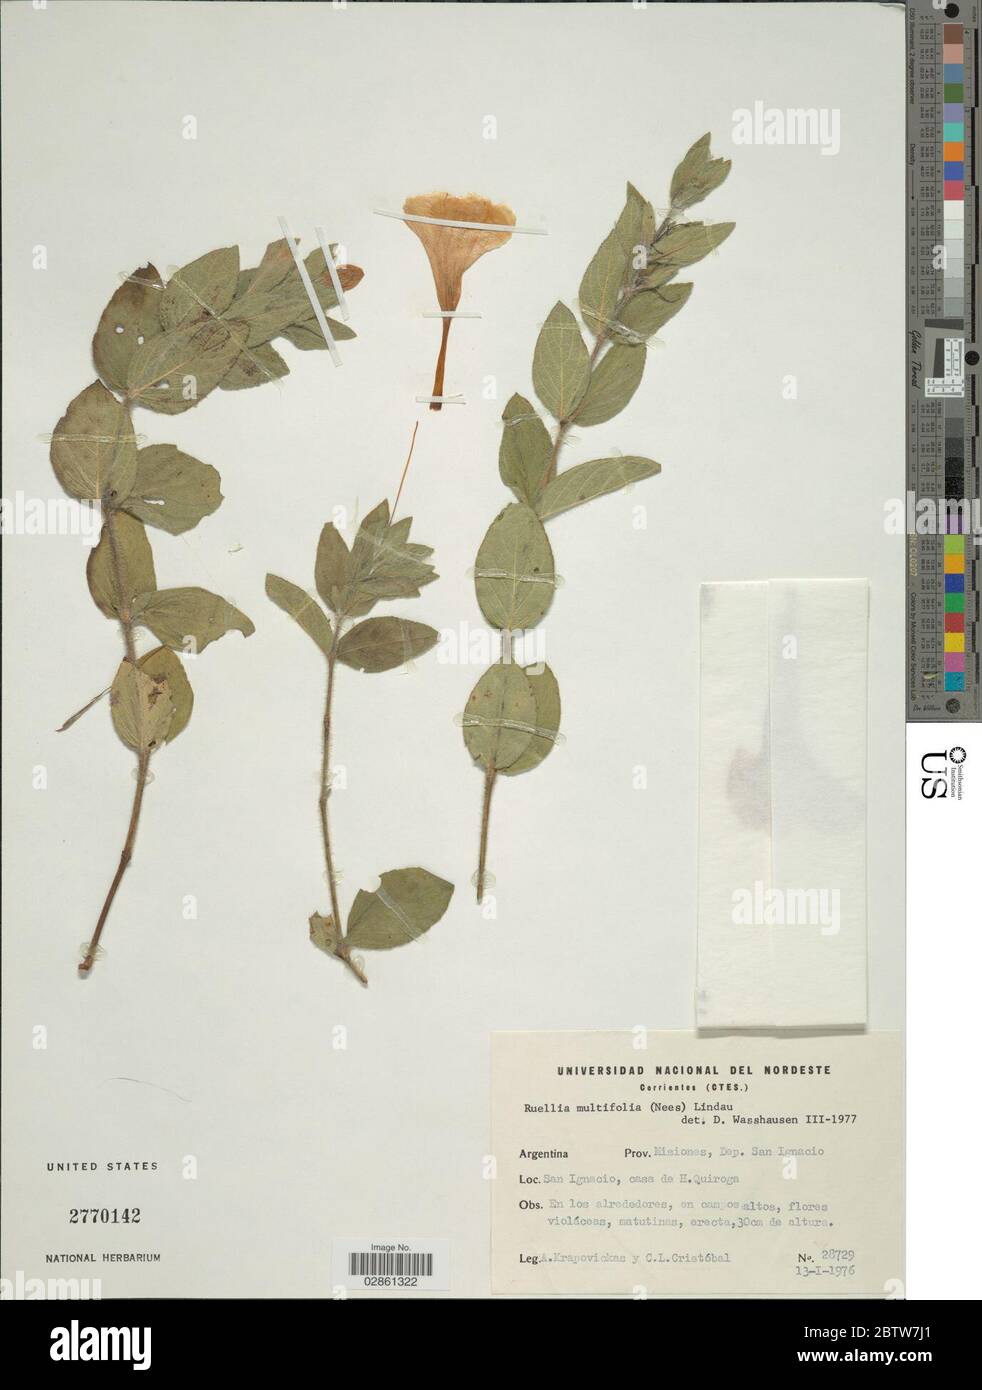 Ruellia multifolia Nees Lindau. Stock Photo